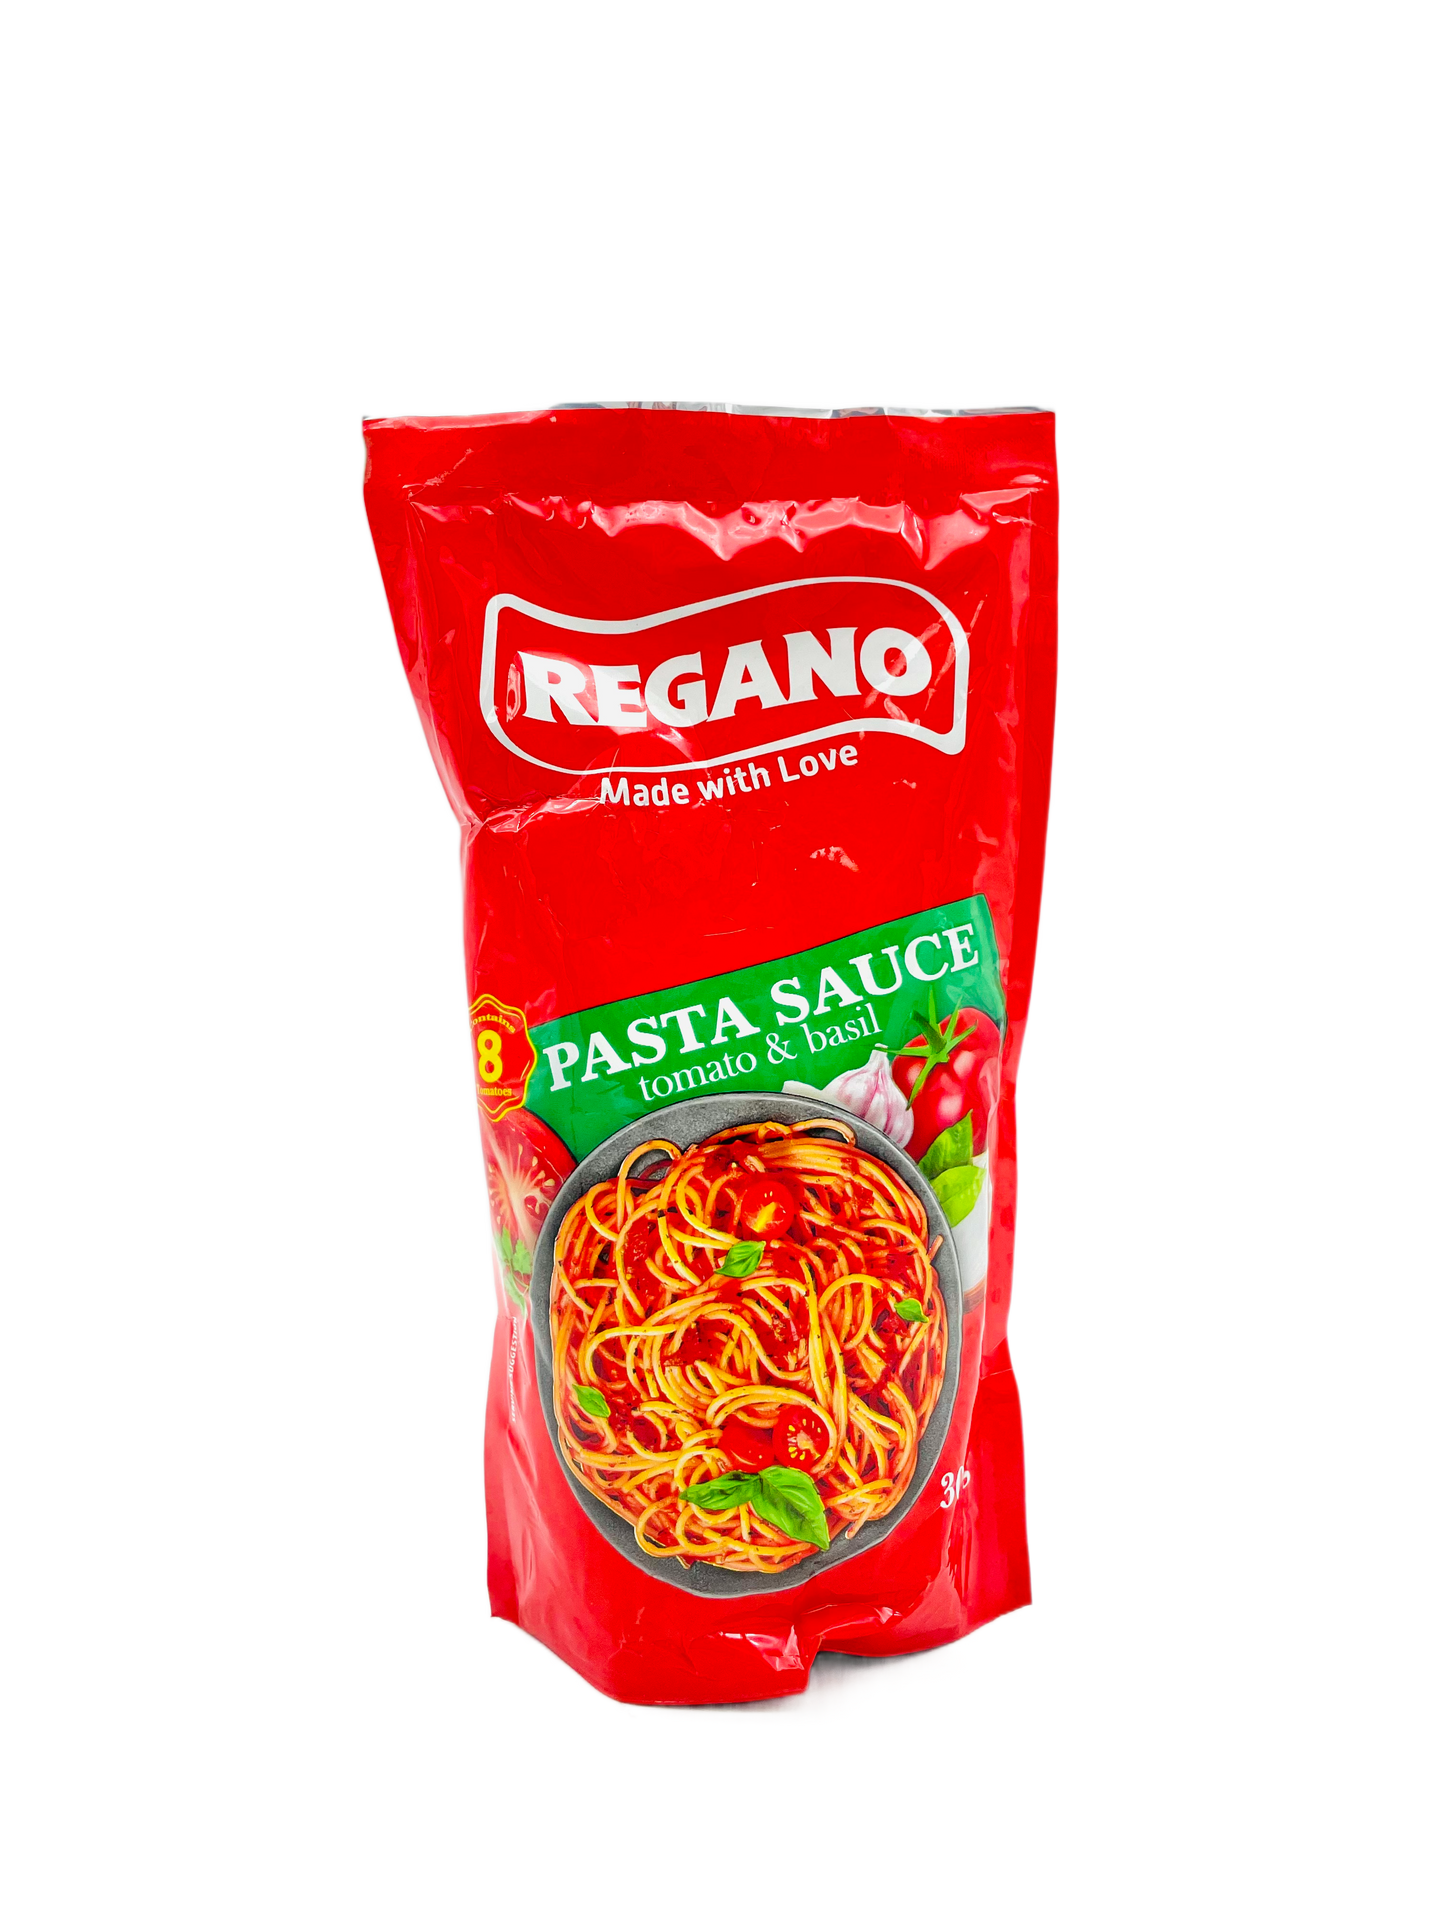 Regano Paste Sauce Tomato & Basil 300g